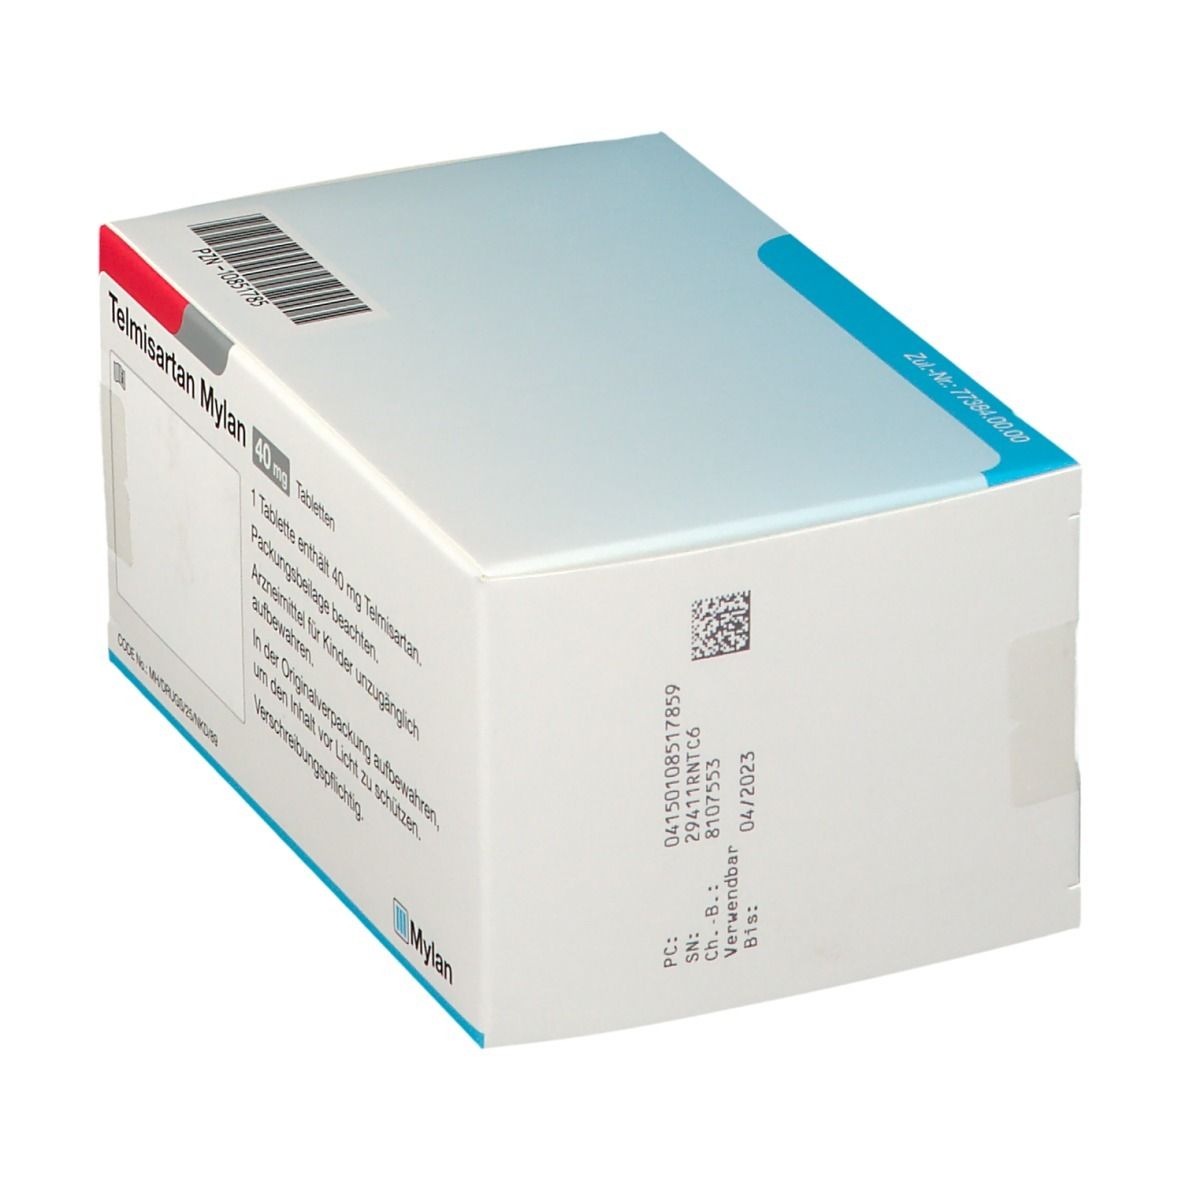 Telmisartan Mylan 40 mg